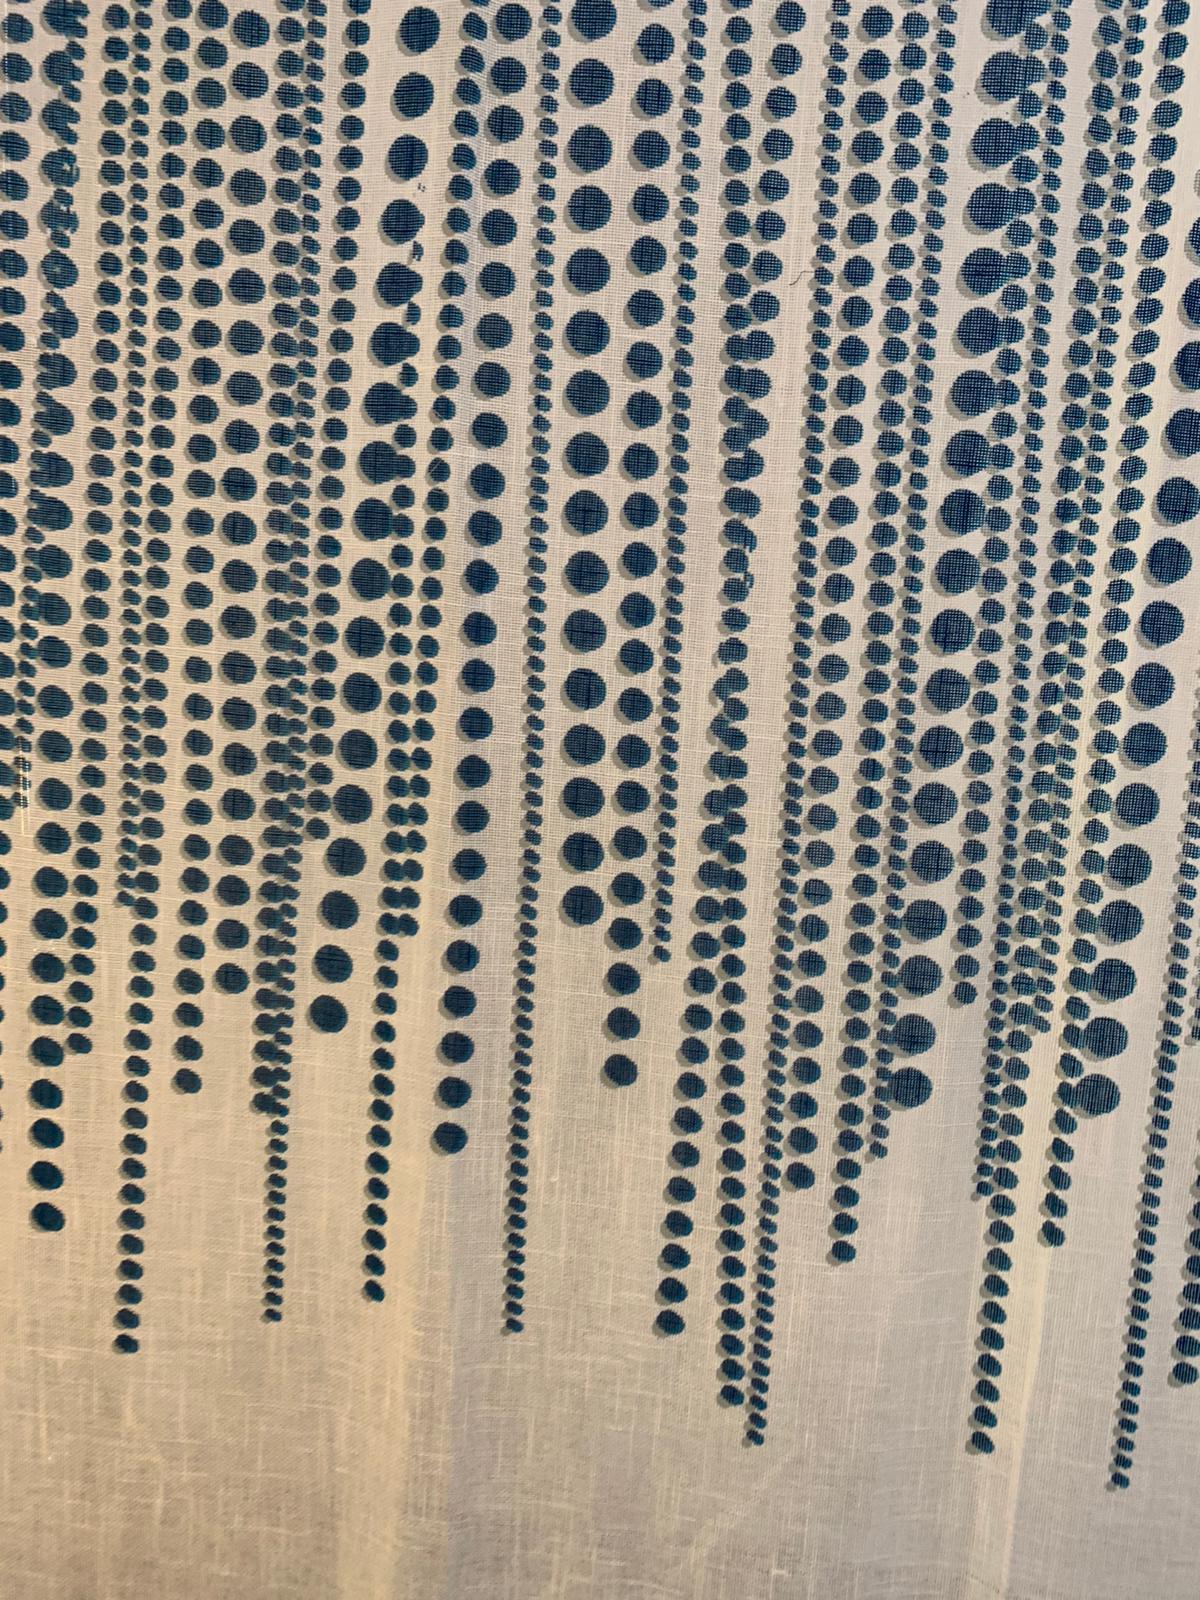 Fabric Divider by Silvio Coppola for Tessitura Di Mompiano, 1970s In Excellent Condition For Sale In Montelabbate, PU